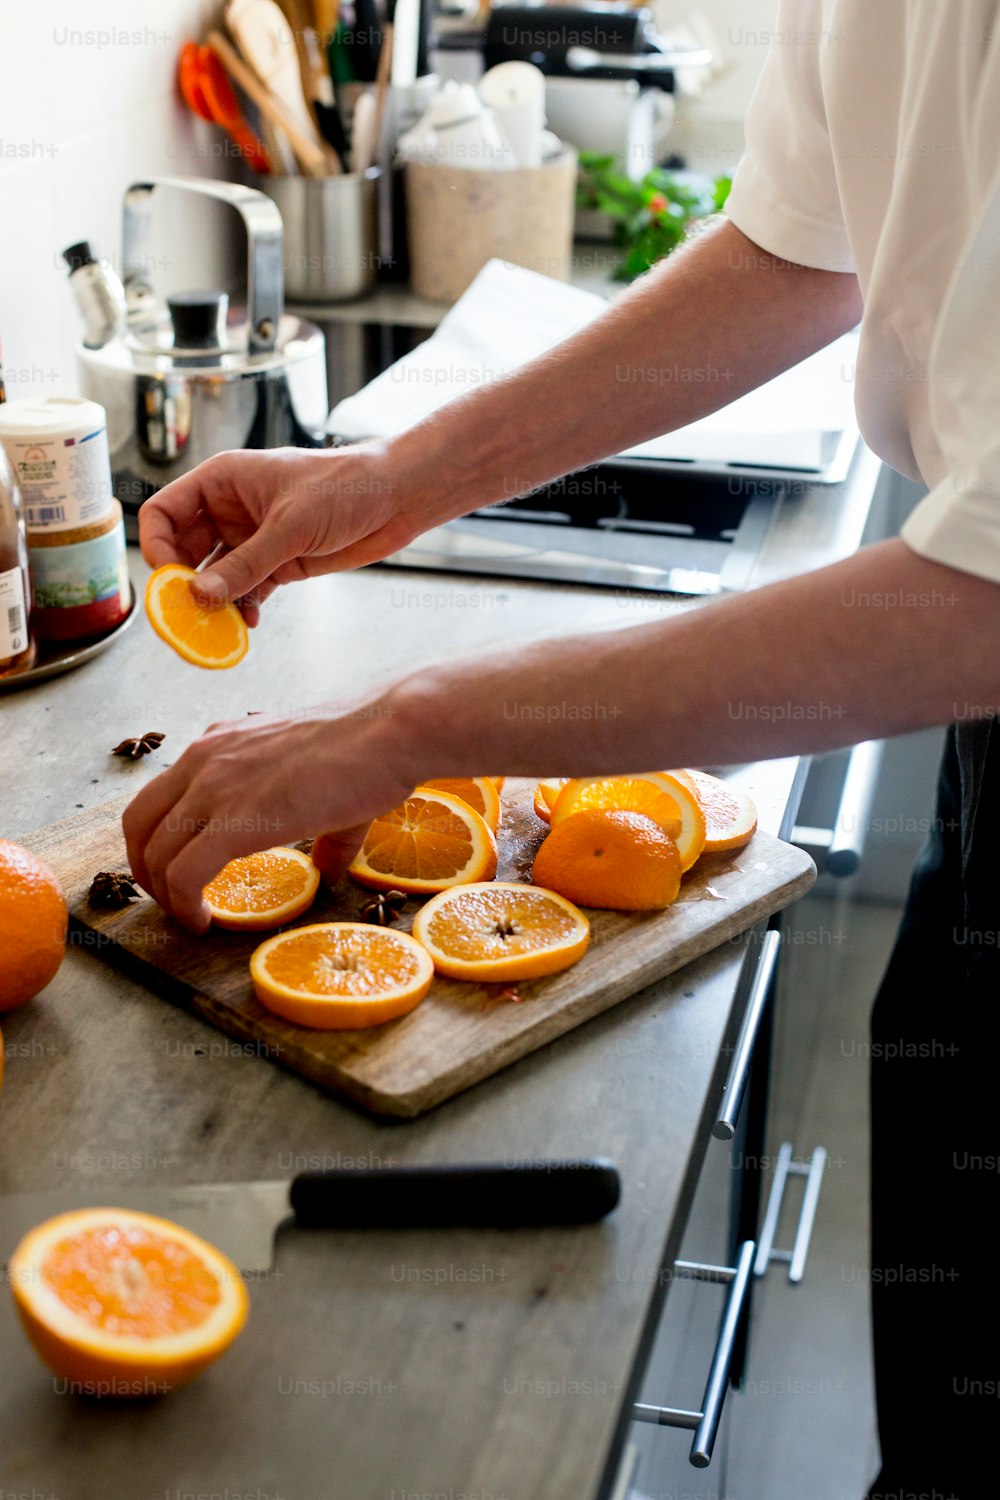 a person is peeling an orange on a cutting board